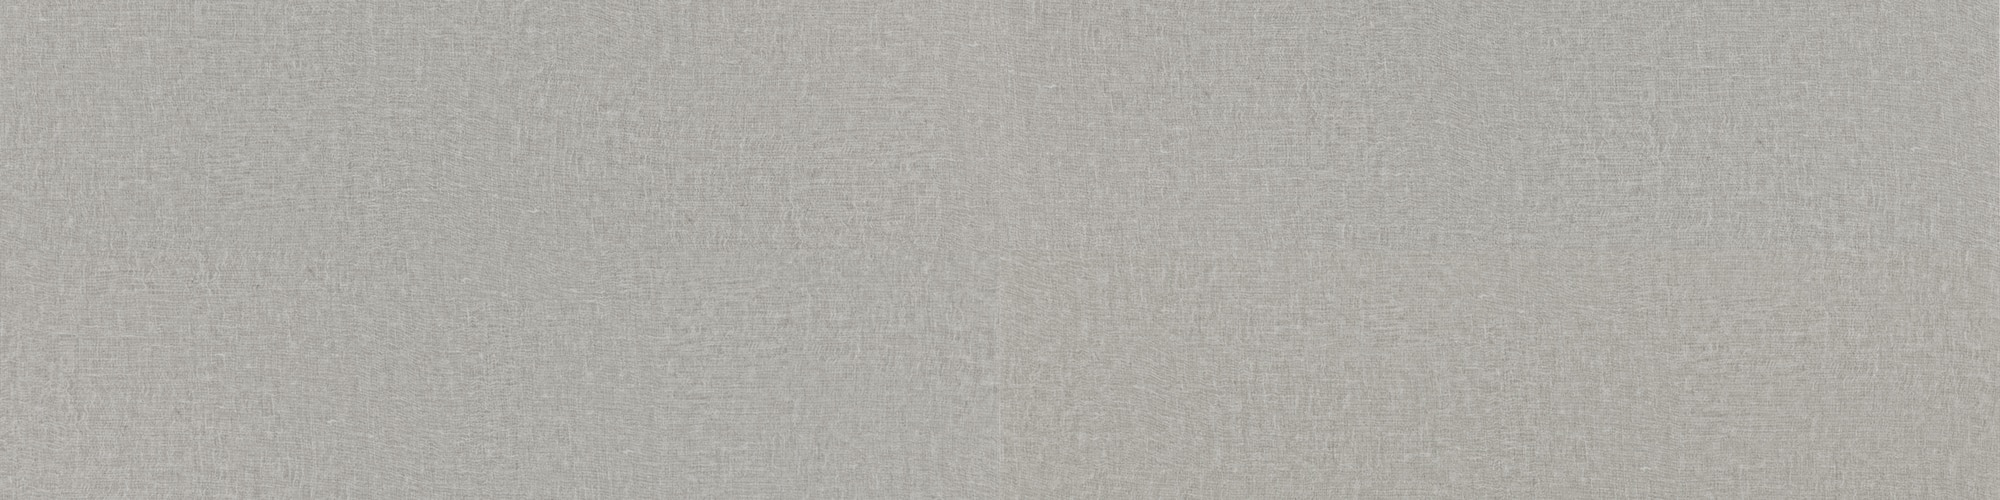 Gravel Fabric, Glue Down, 6X24, 3.0MM, 2